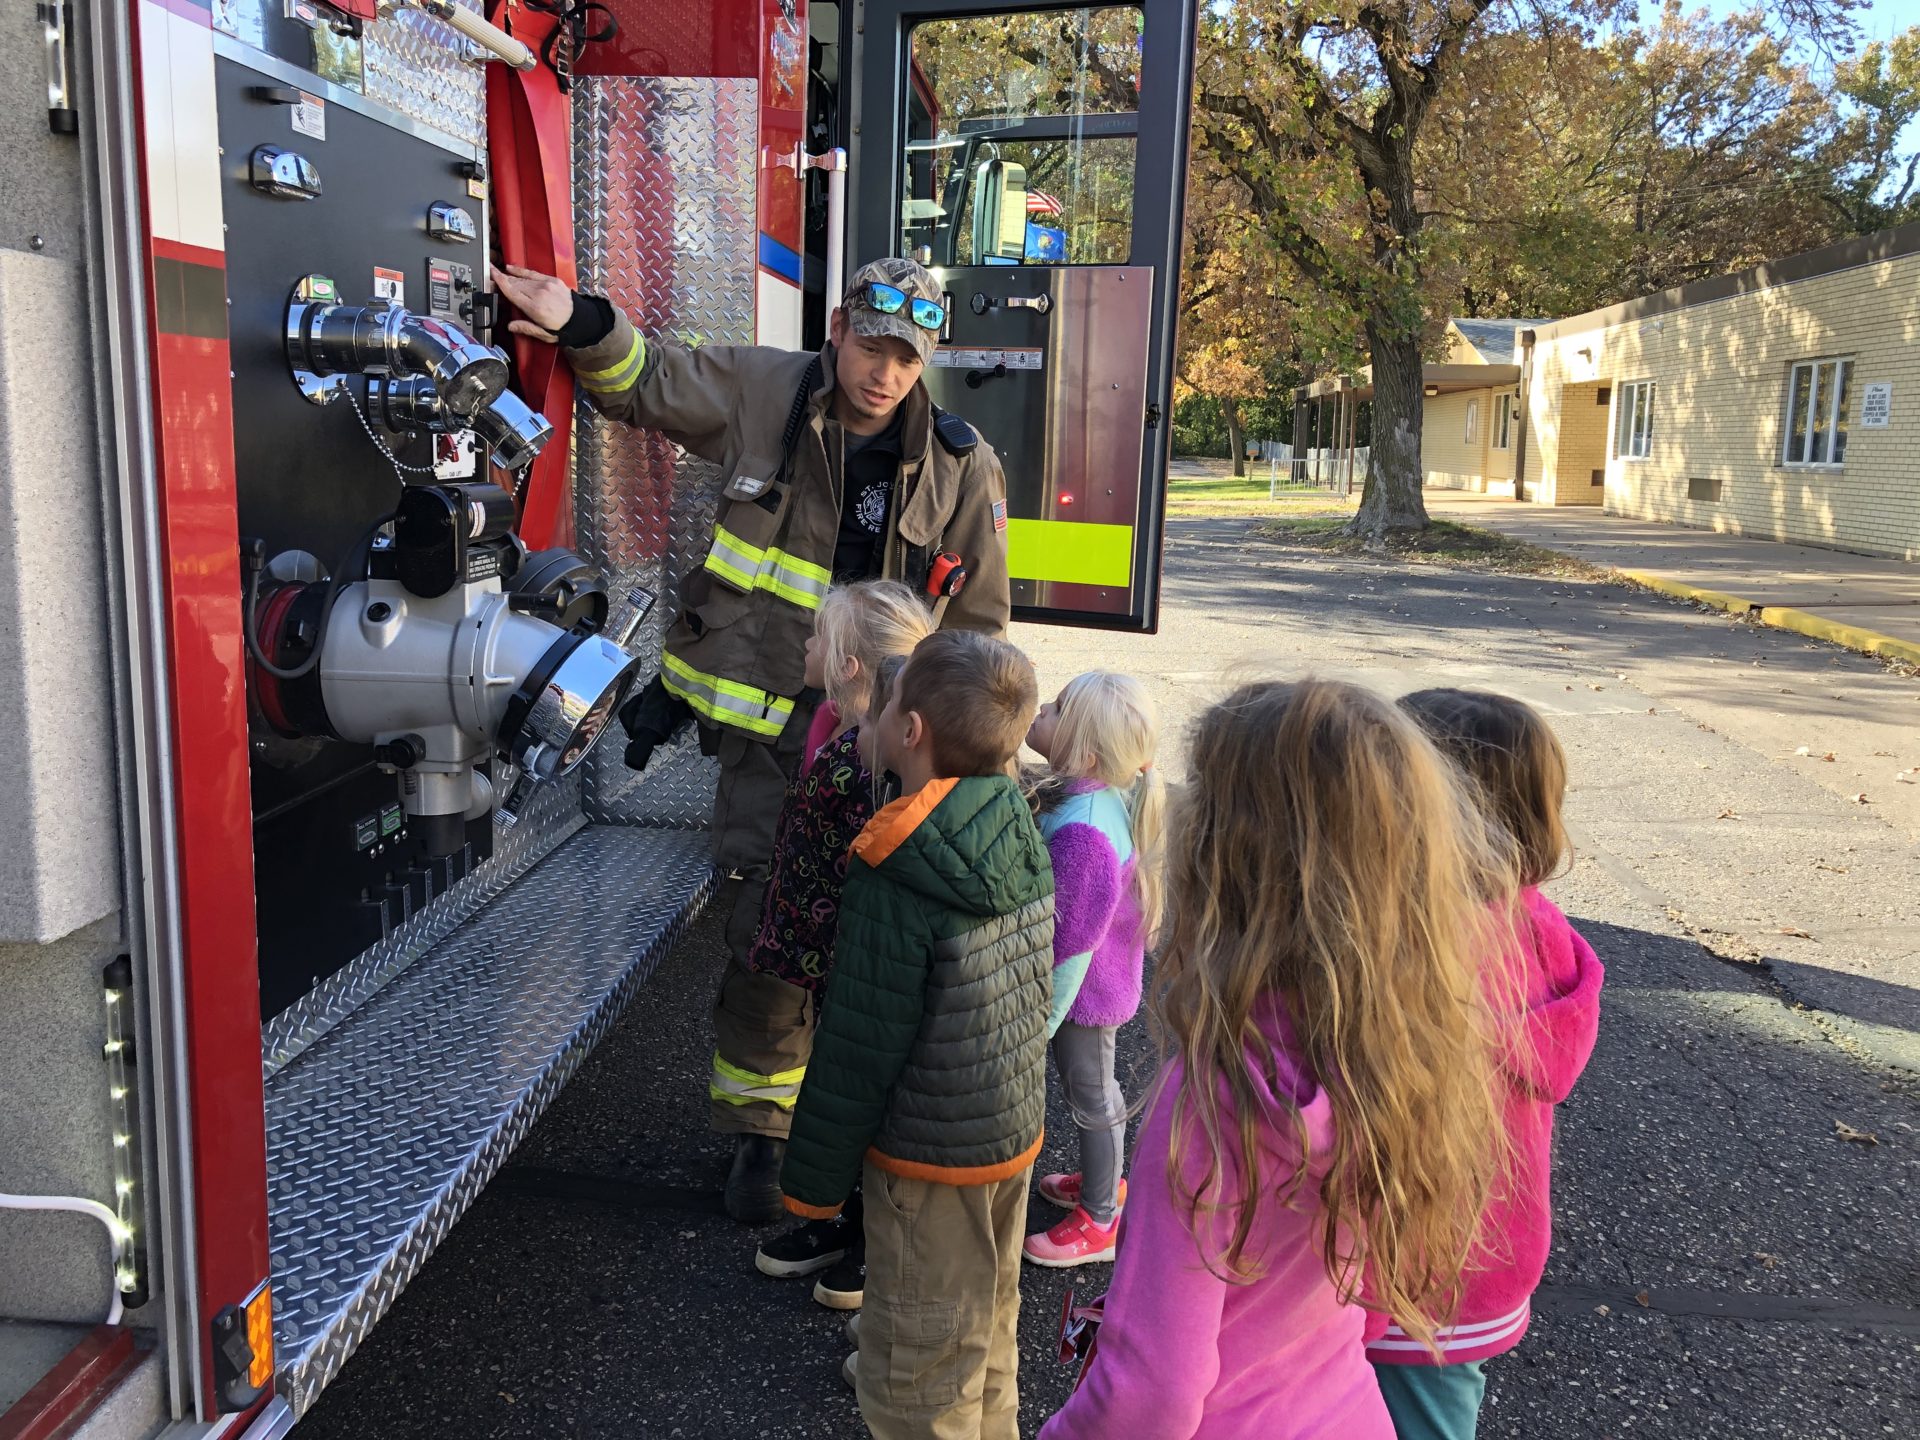 A group of children listen to a presentation by a firefighter near the fire truck.